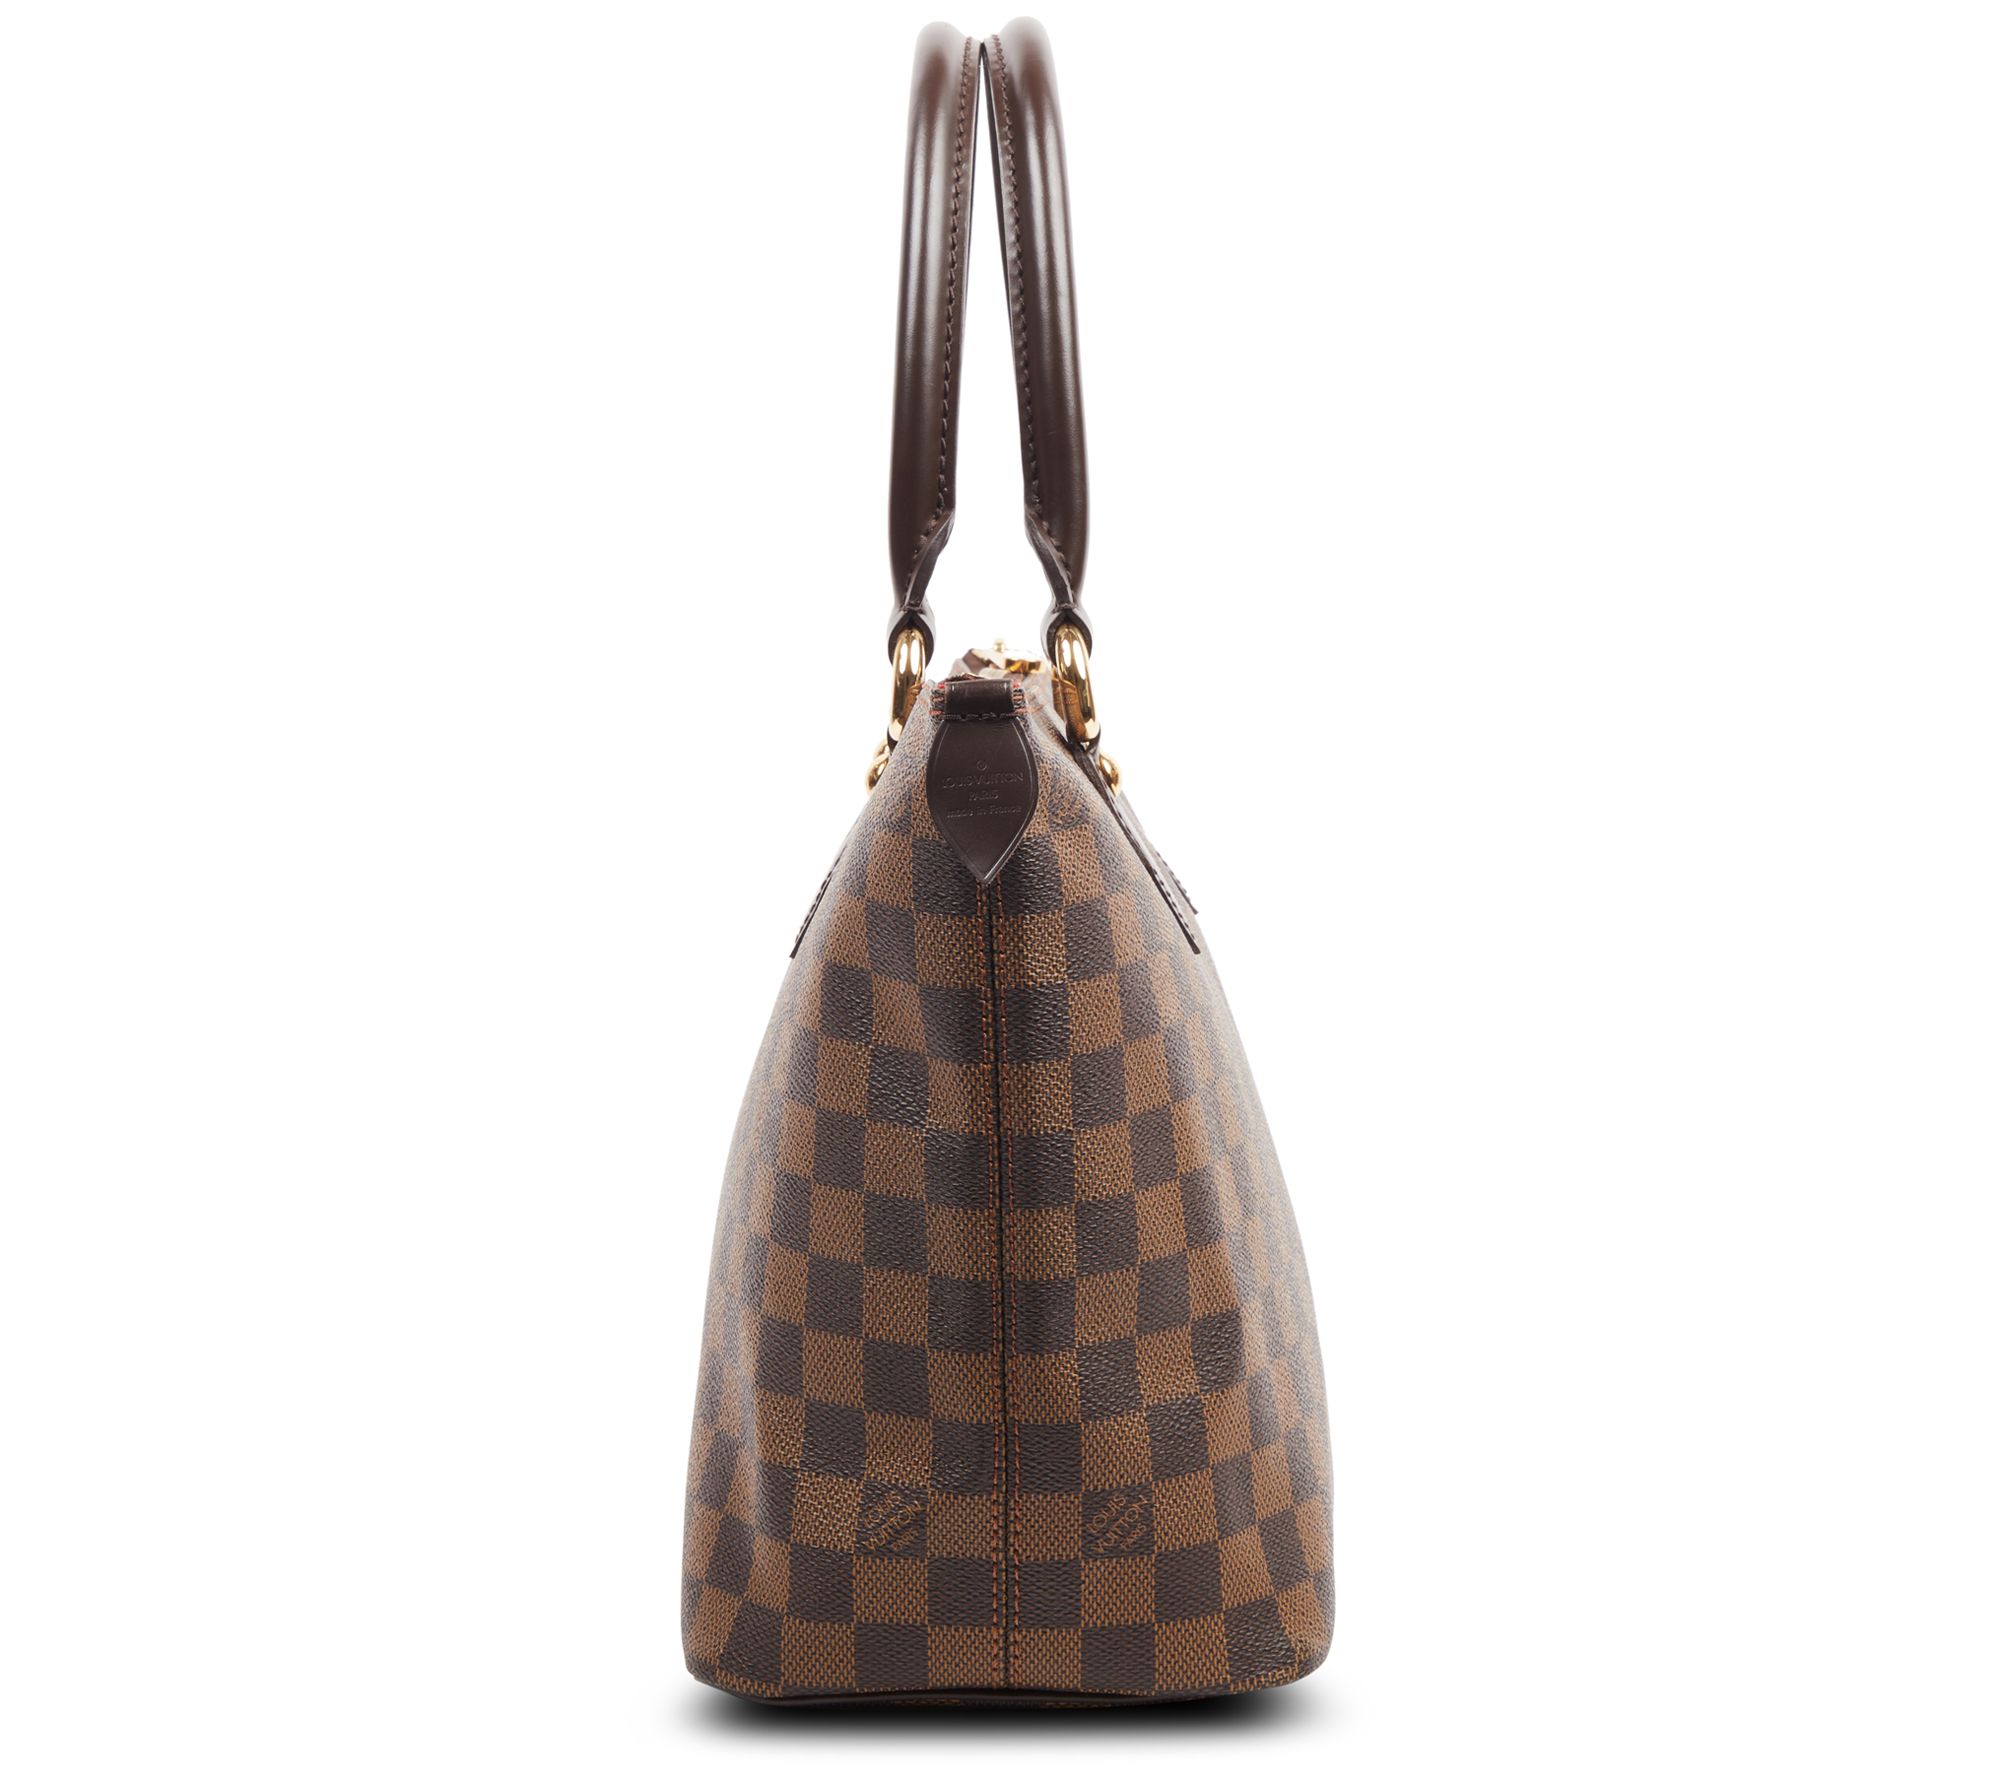 Pre-Owned Louis Vuitton Siena PM Damier Ebene Tote Bag - Pristine Condition  